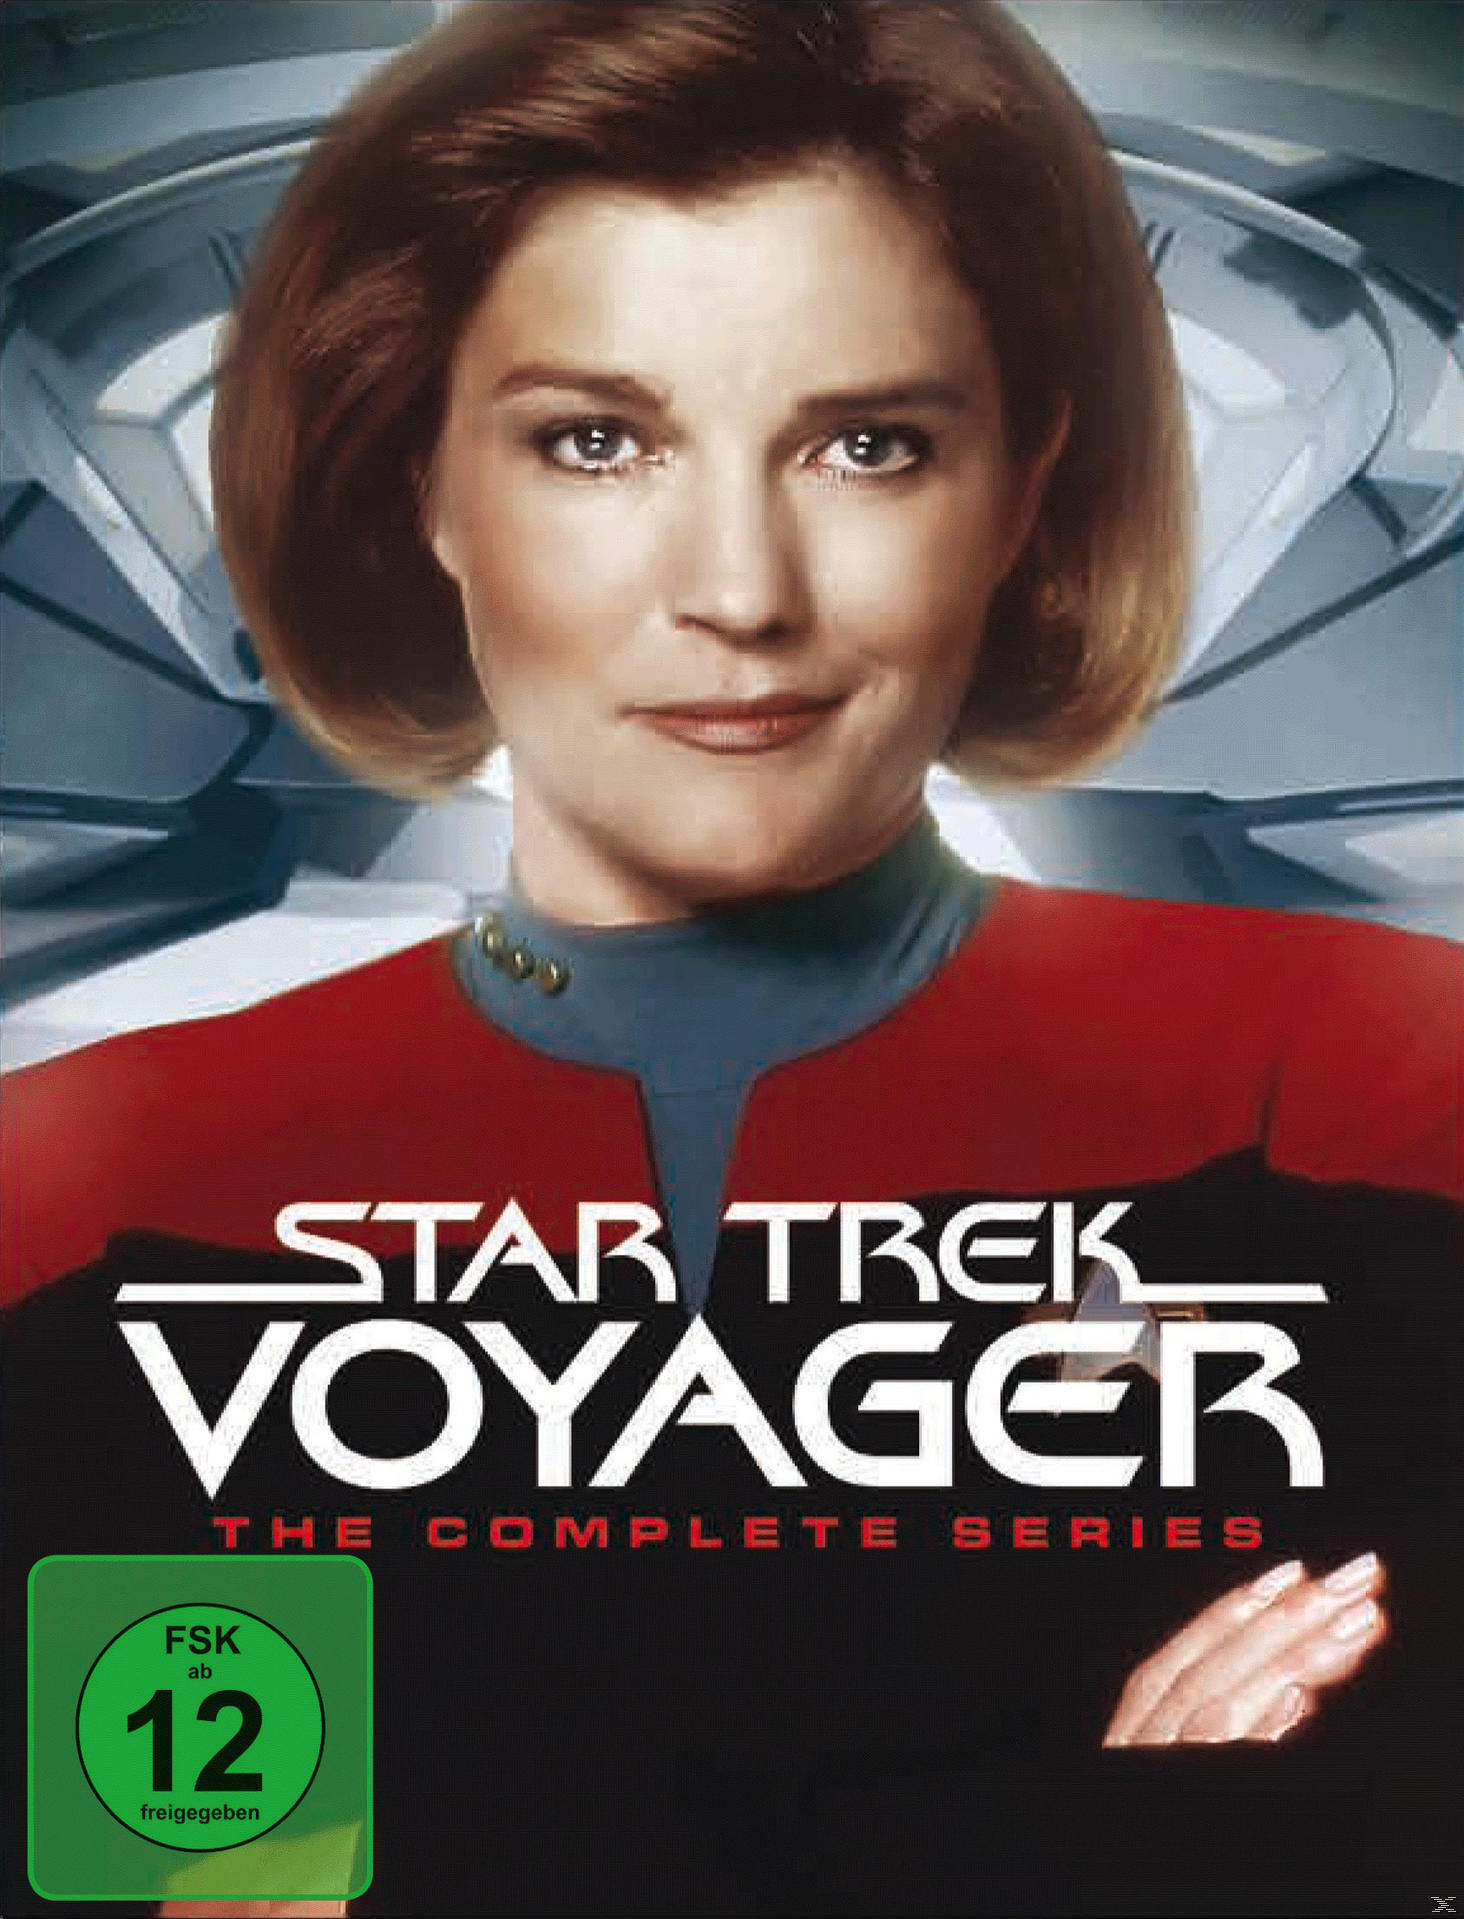 Complete - TREK: DVD Boxset Voyager STAR